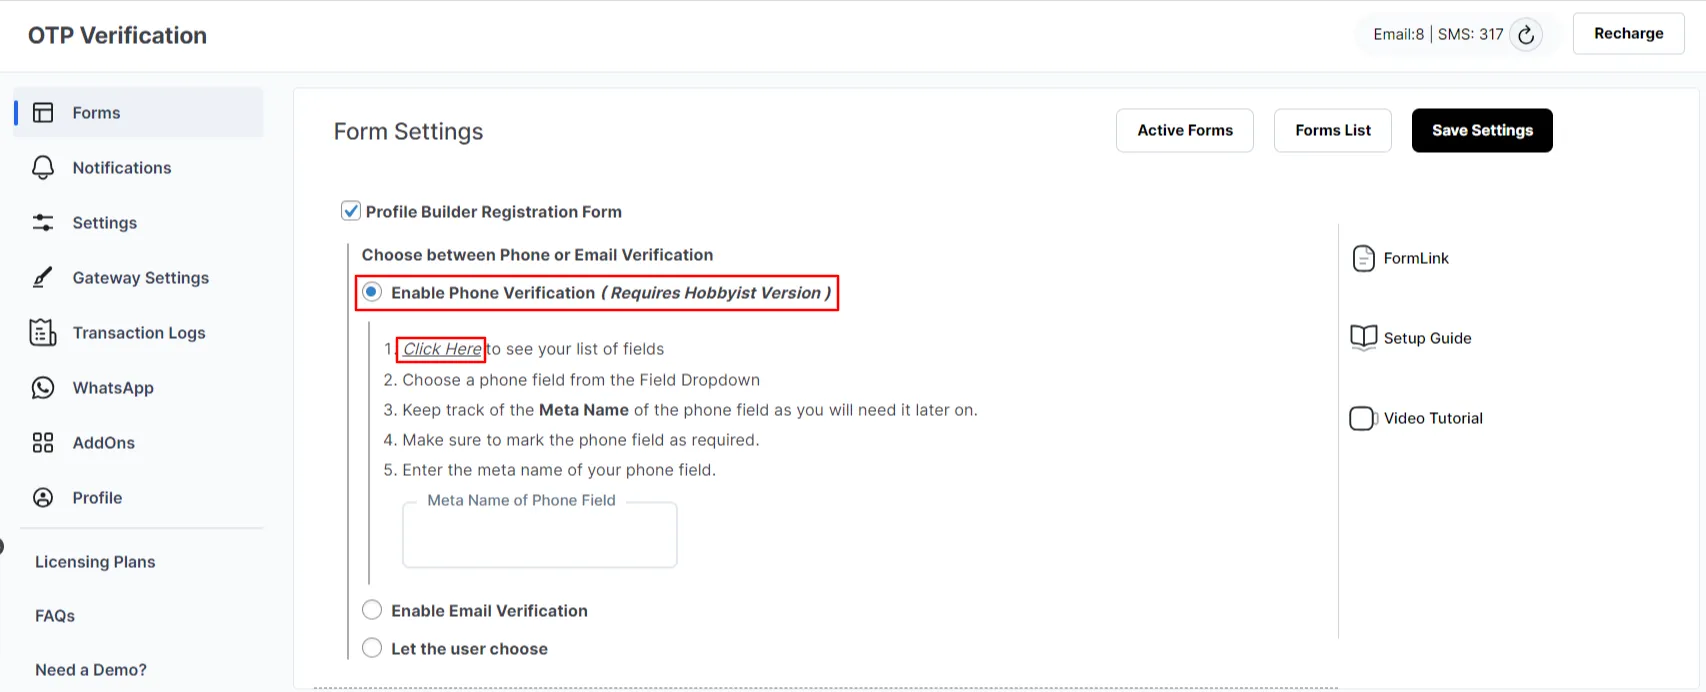 Profile Builder Registration Forms - enable phone verification